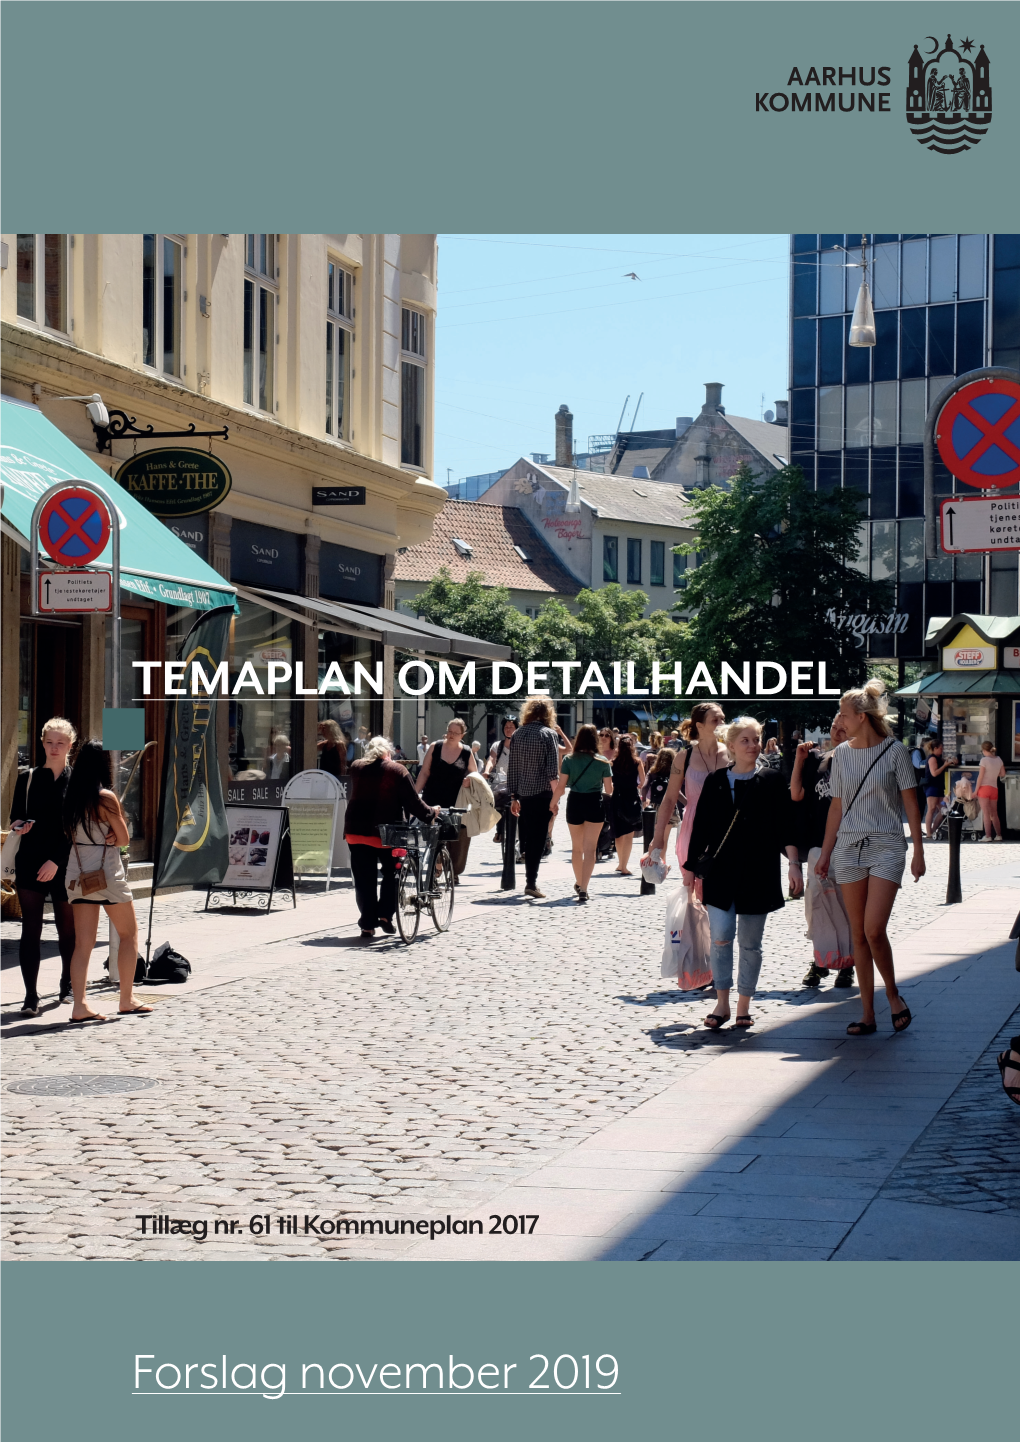 Forslag November 2019 TEMAPLAN OM DETAILHANDEL